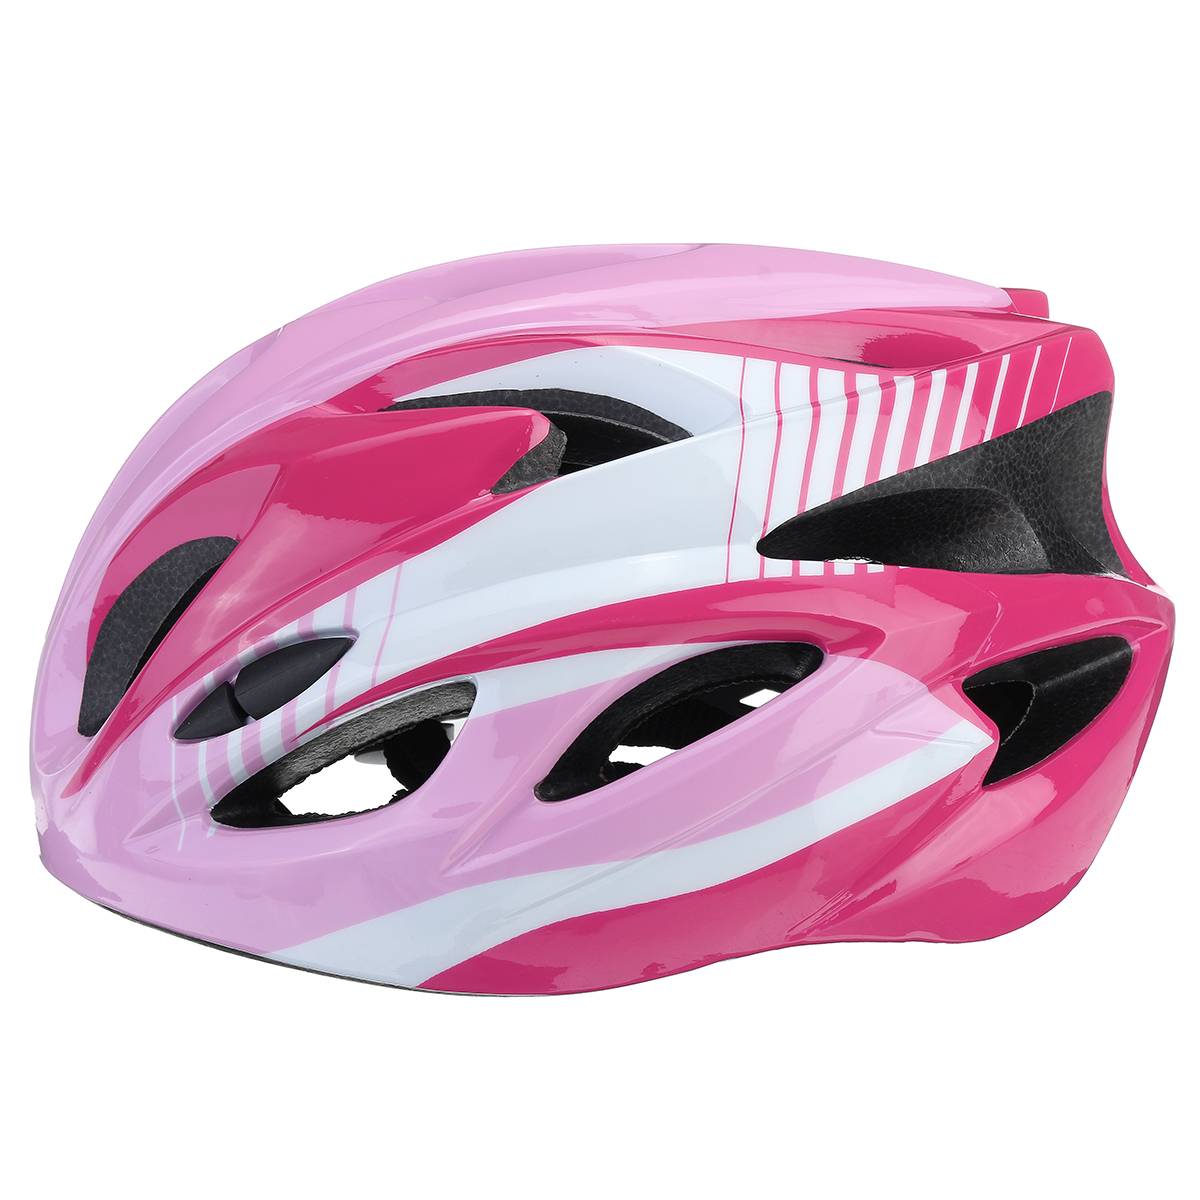 Kids-Helmet-Bicycle-Ultralight-Childrens-Protective-Gear-Girls-Cycling-Riding-Helmet-Kids-Bicycle-Sa-1796828-10